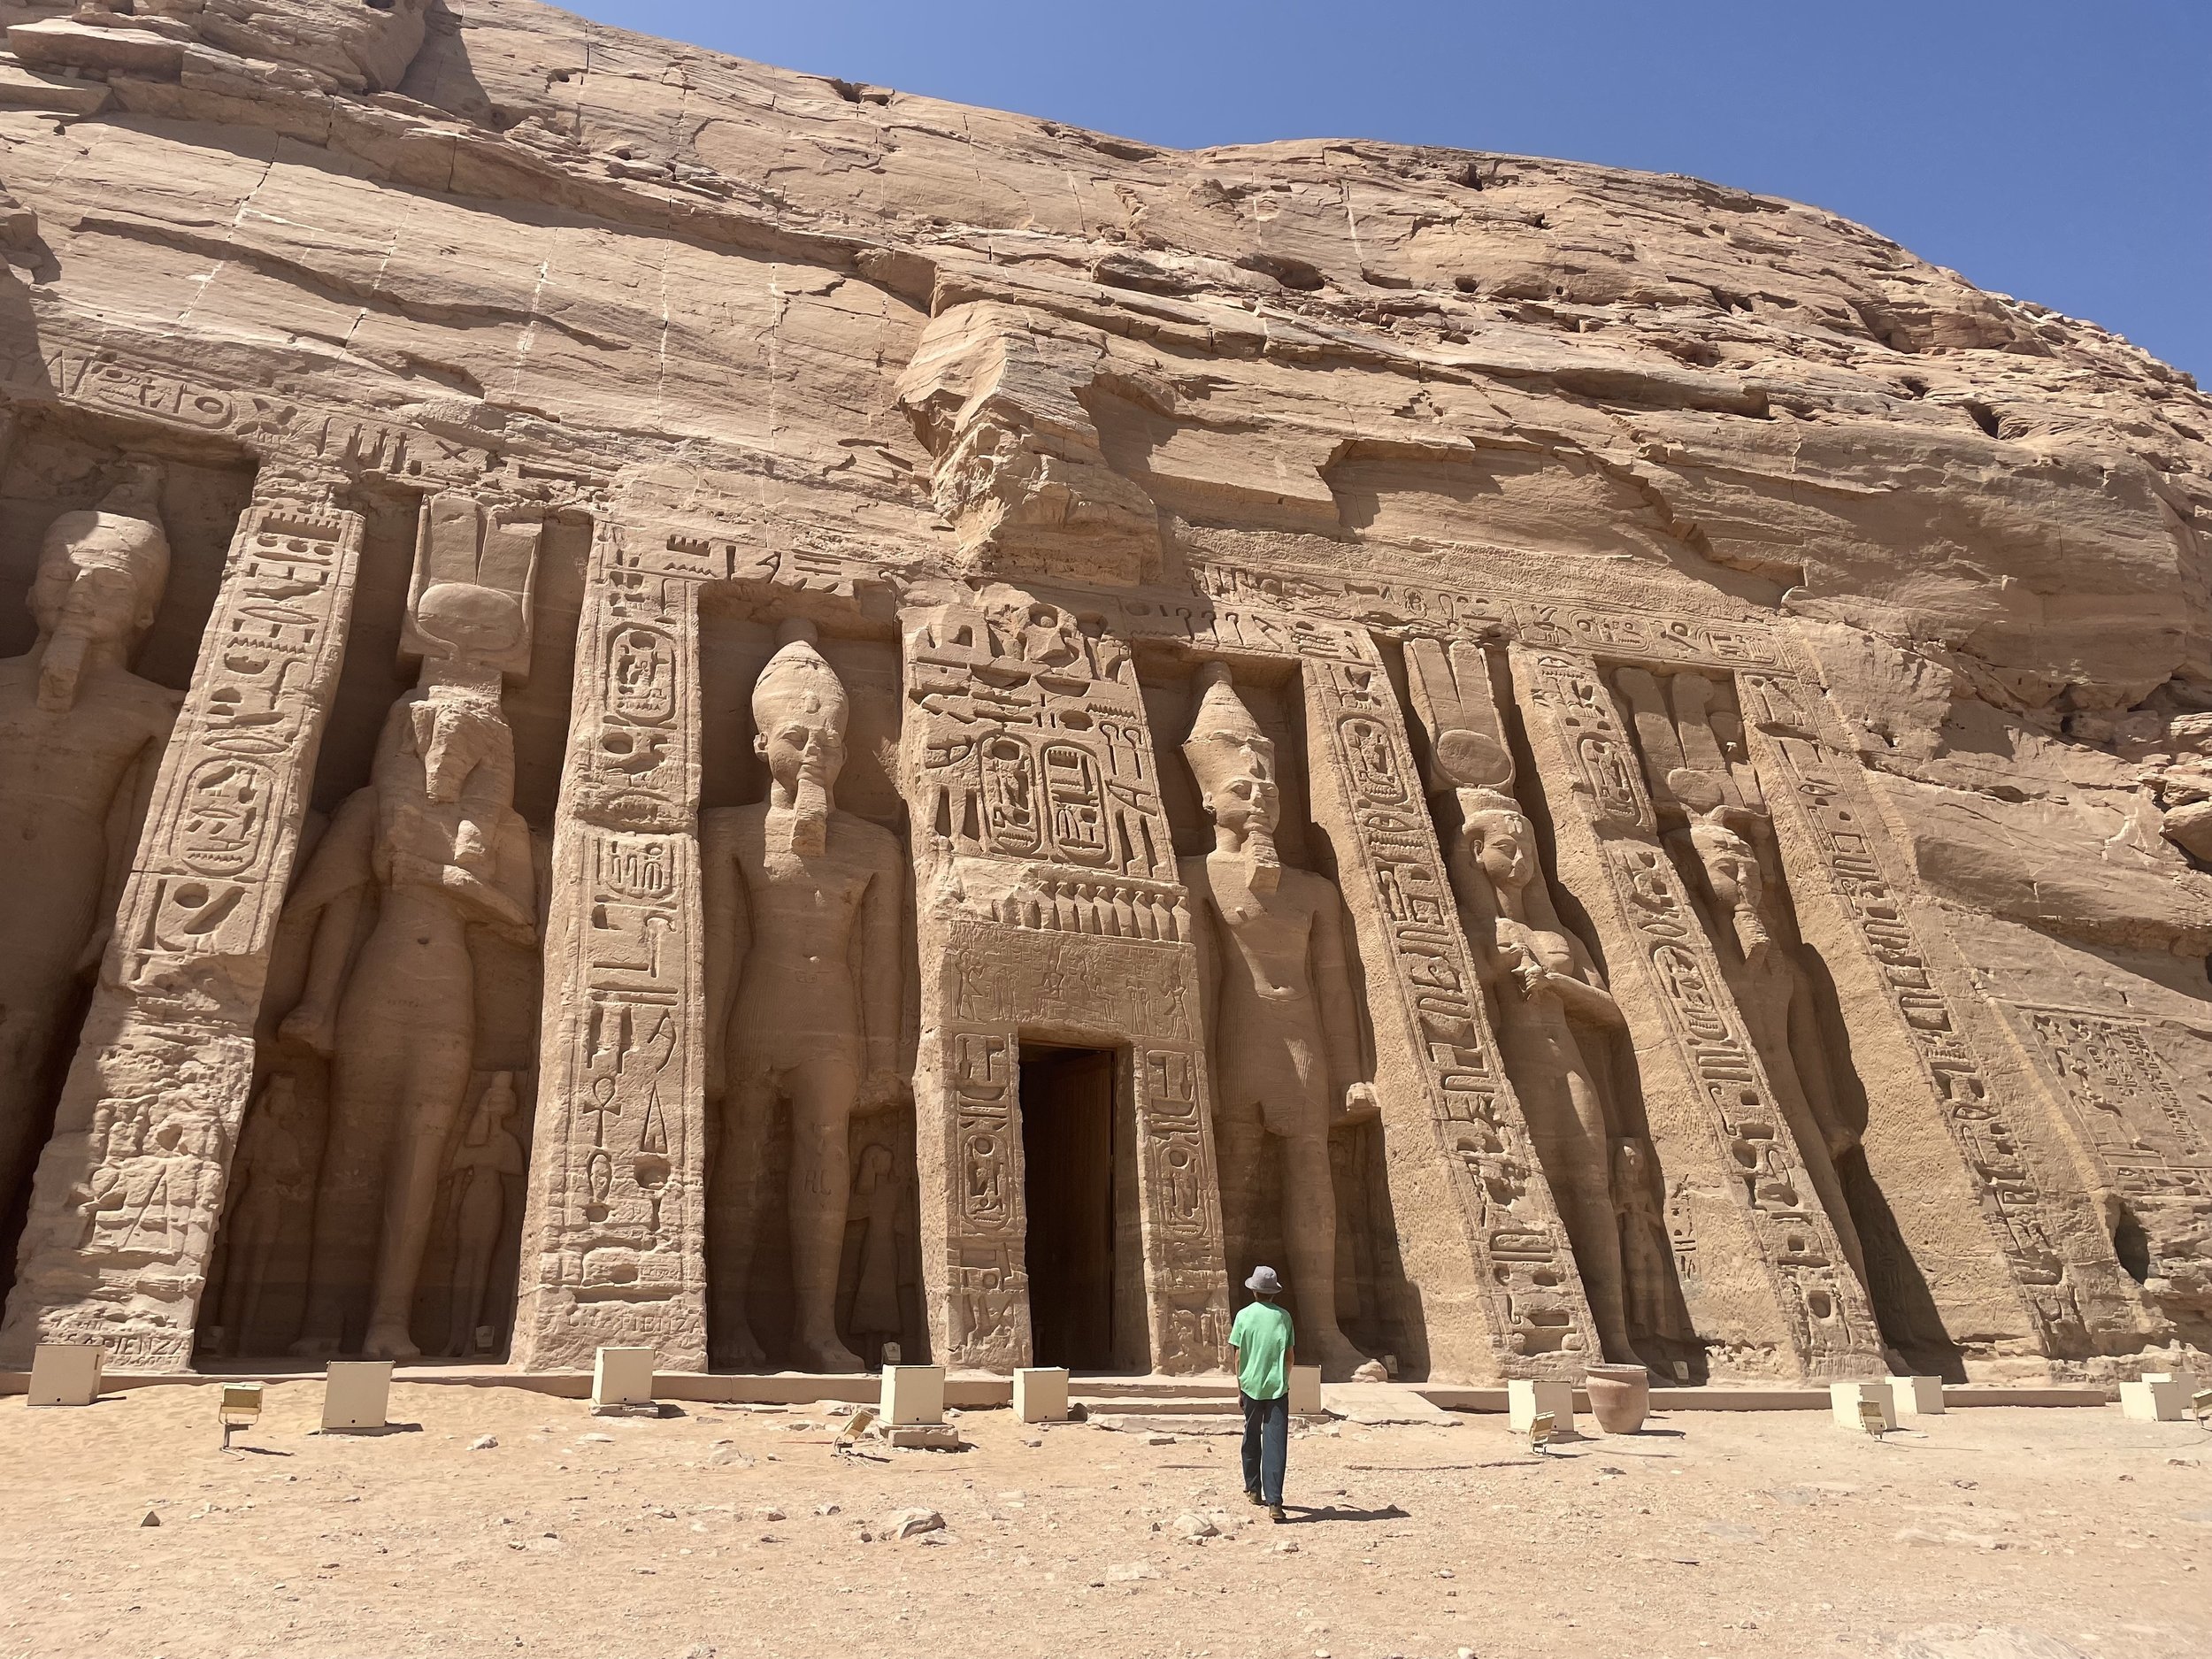 In front of Nefertari's temple